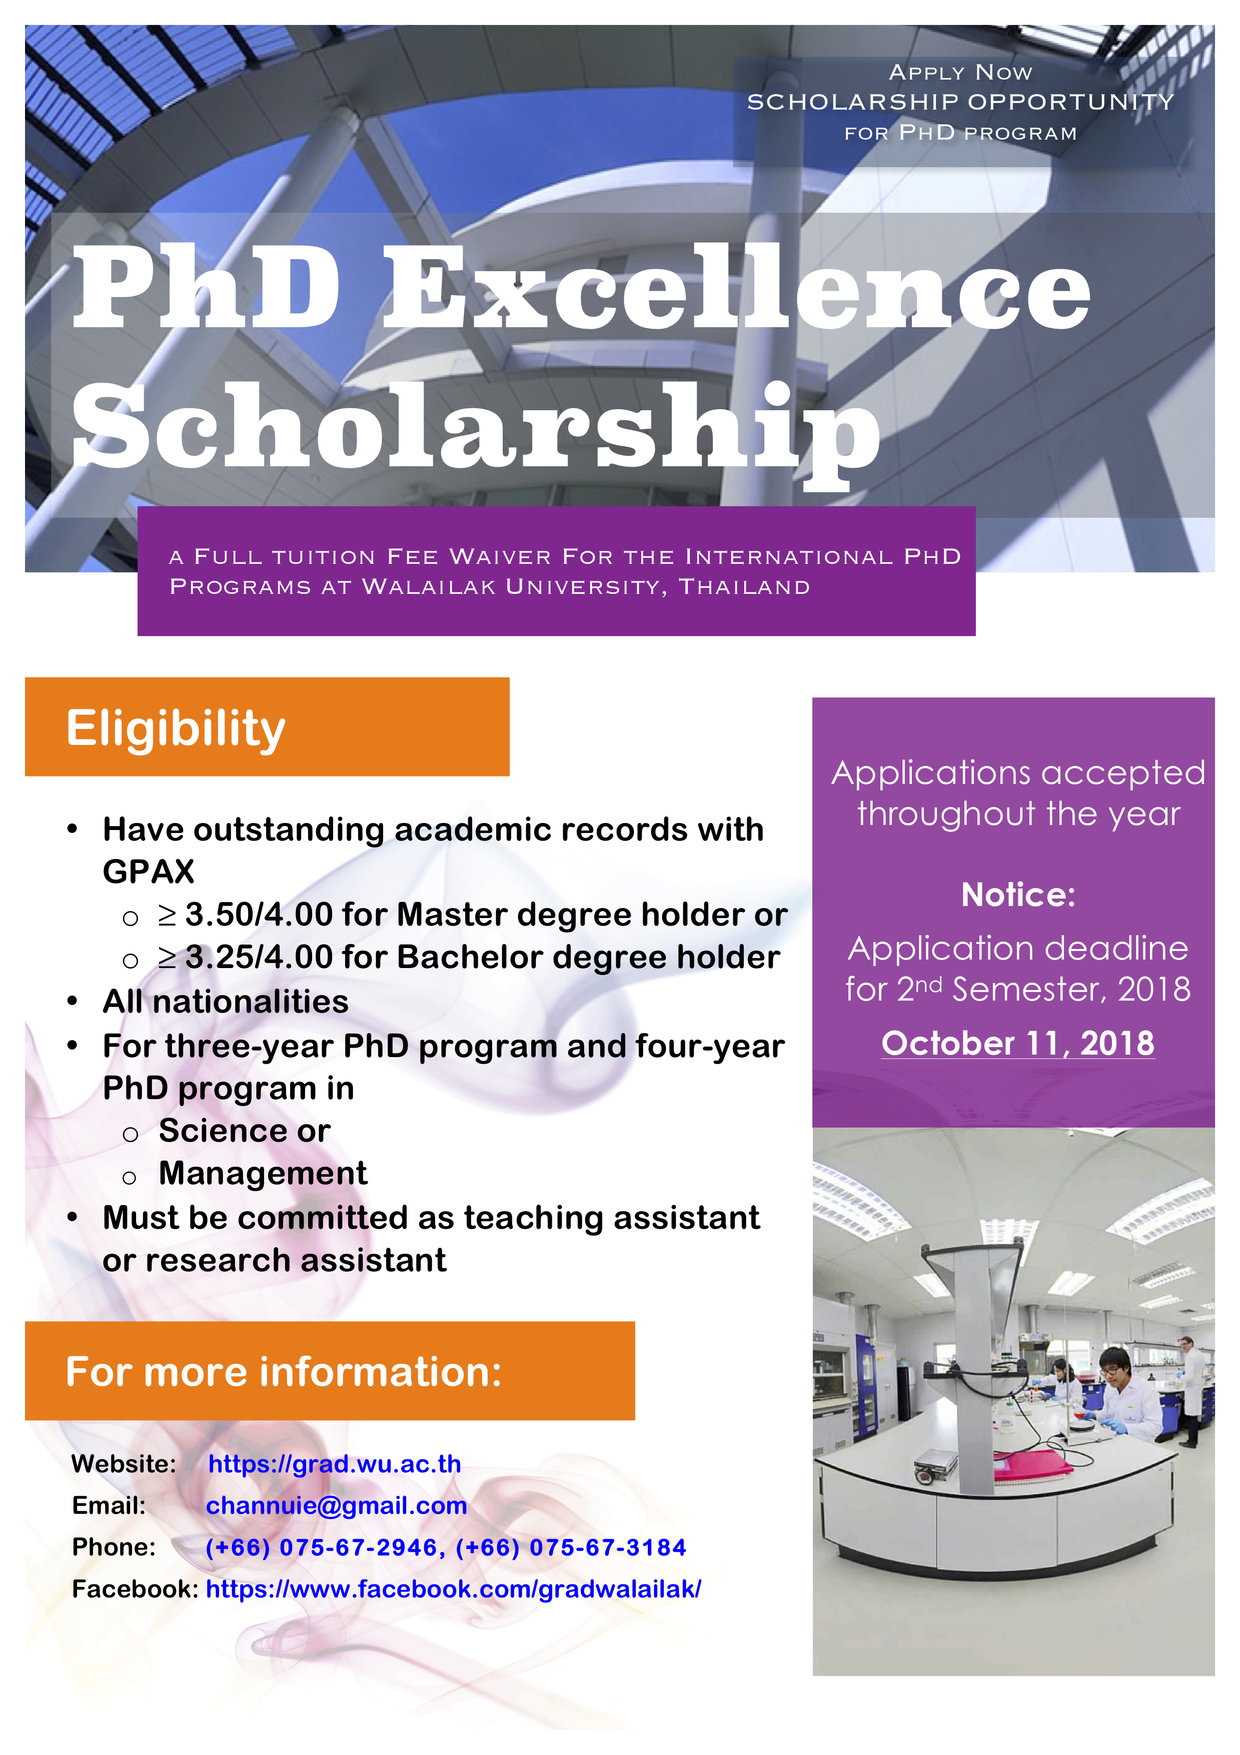 phd scholarship online